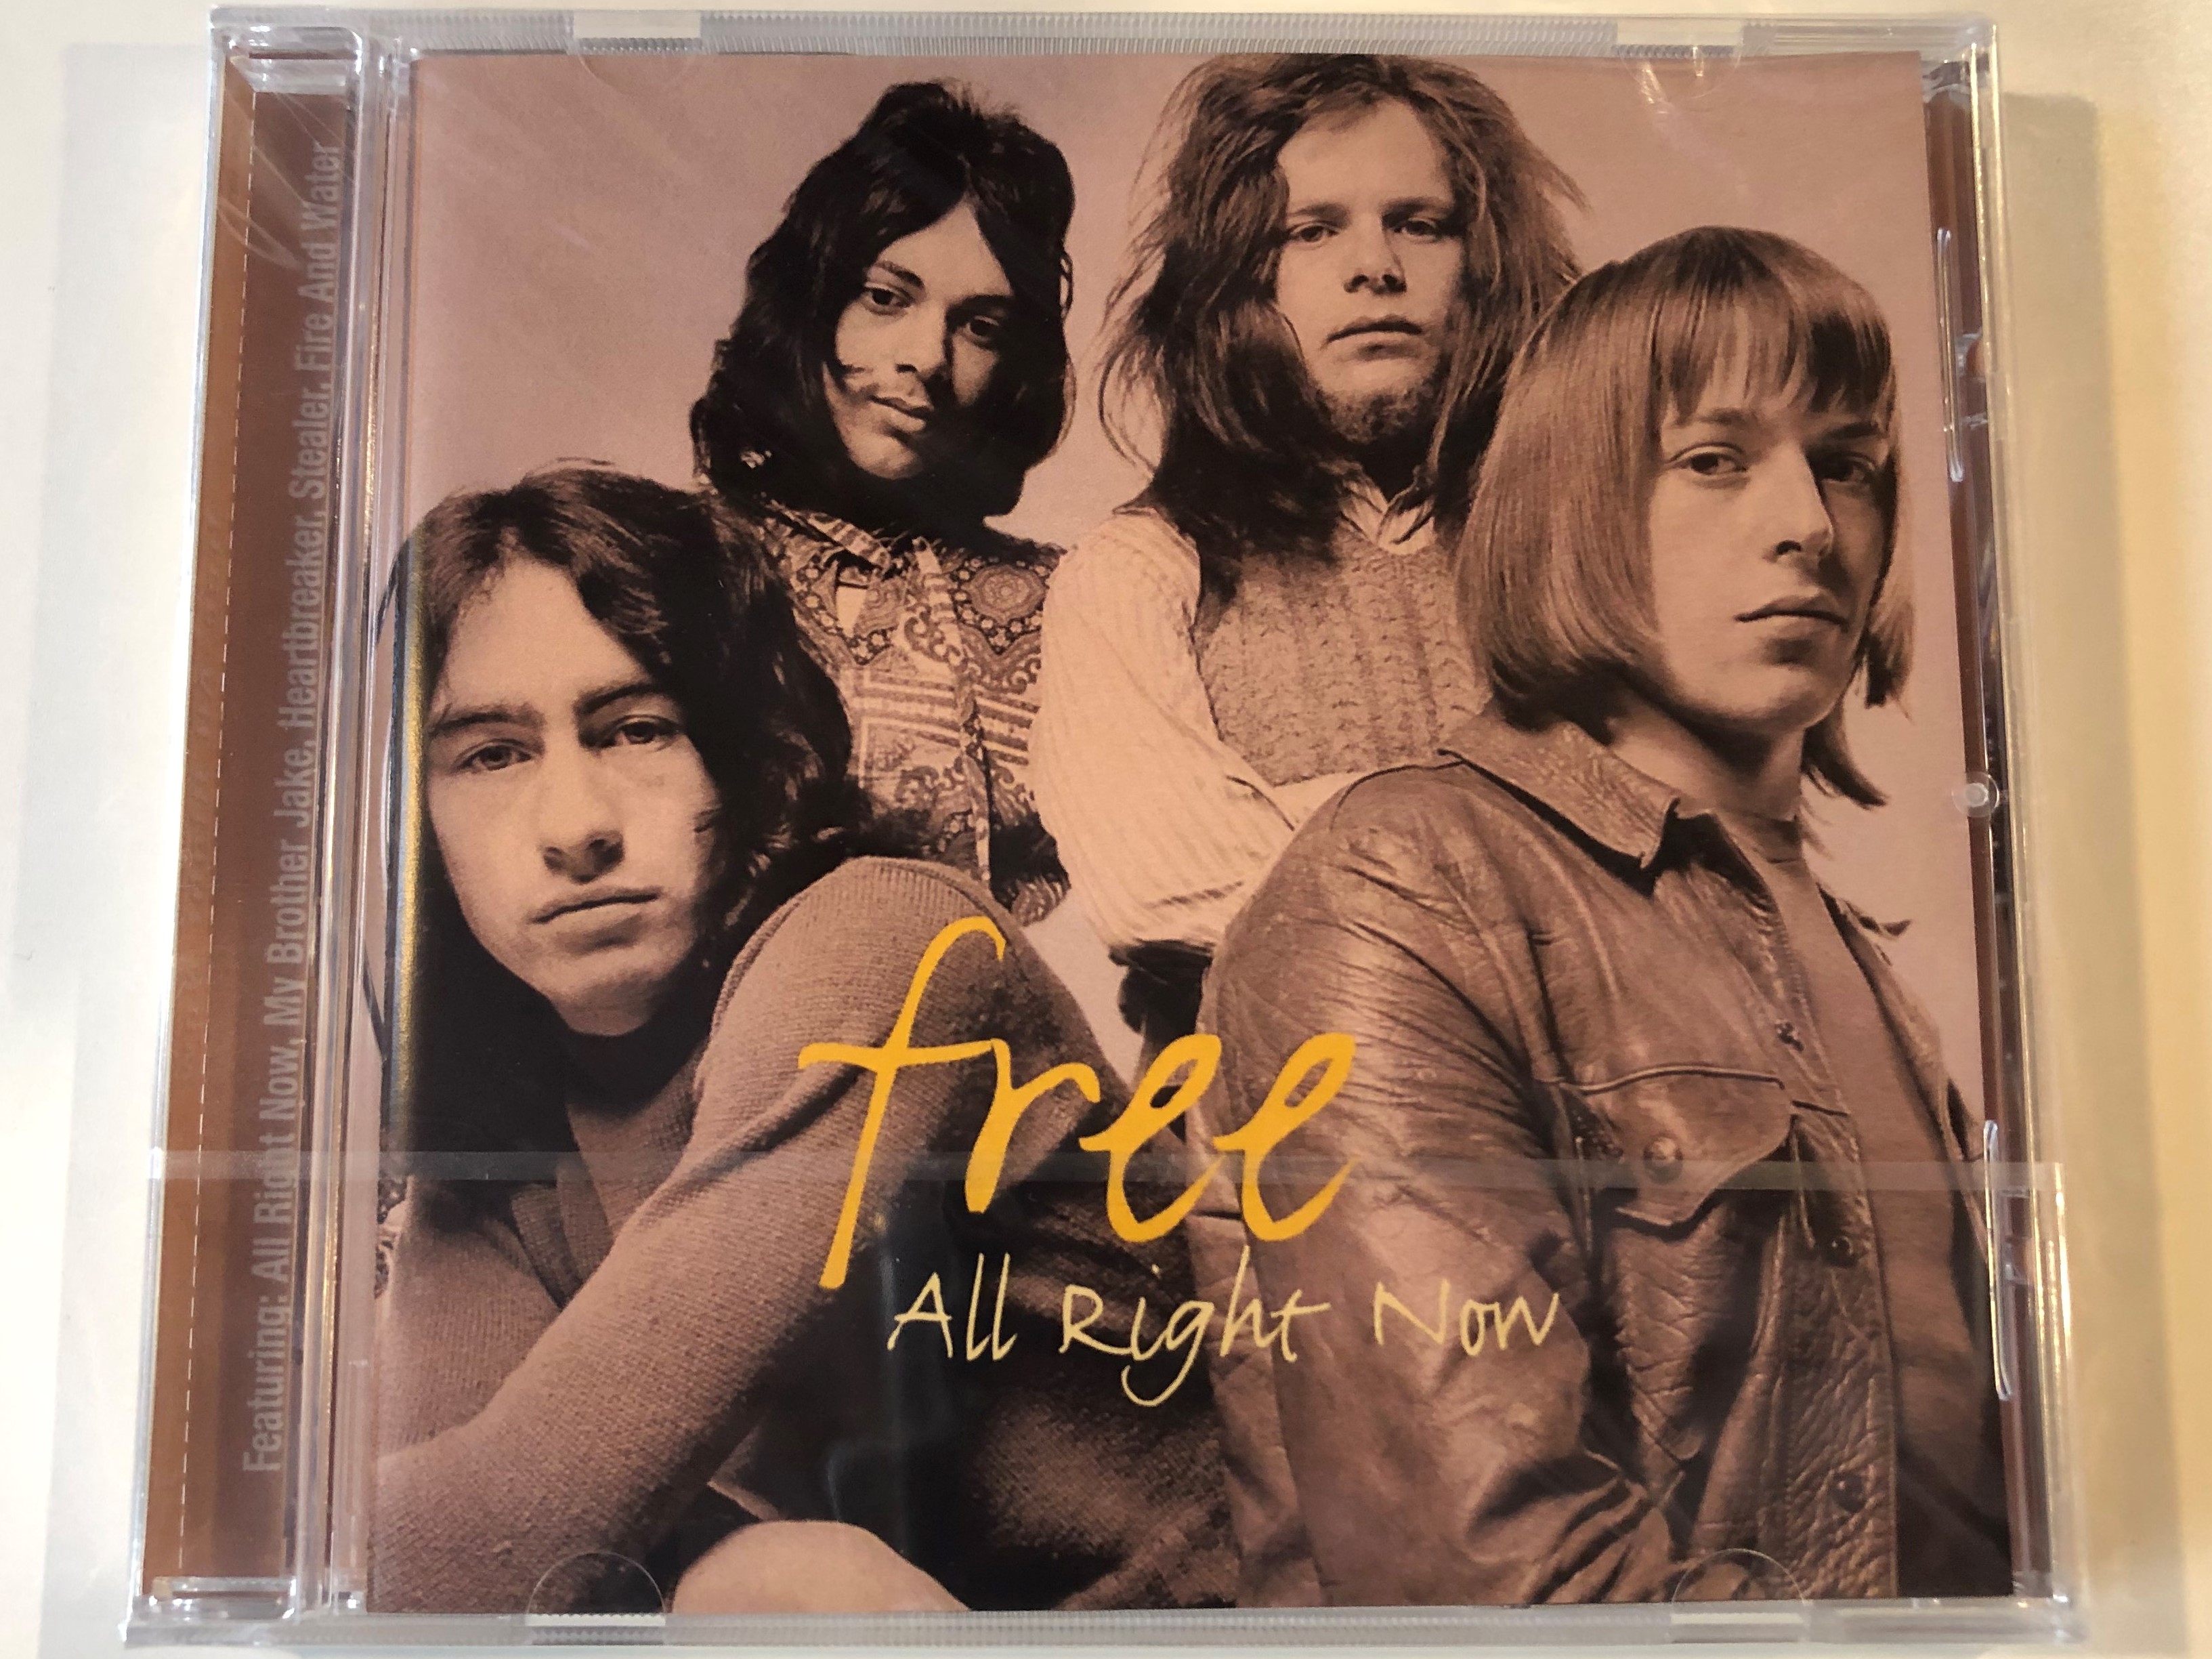 free-all-right-now-spectrum-music-audio-cd-1999-544-167-2-1-.jpg